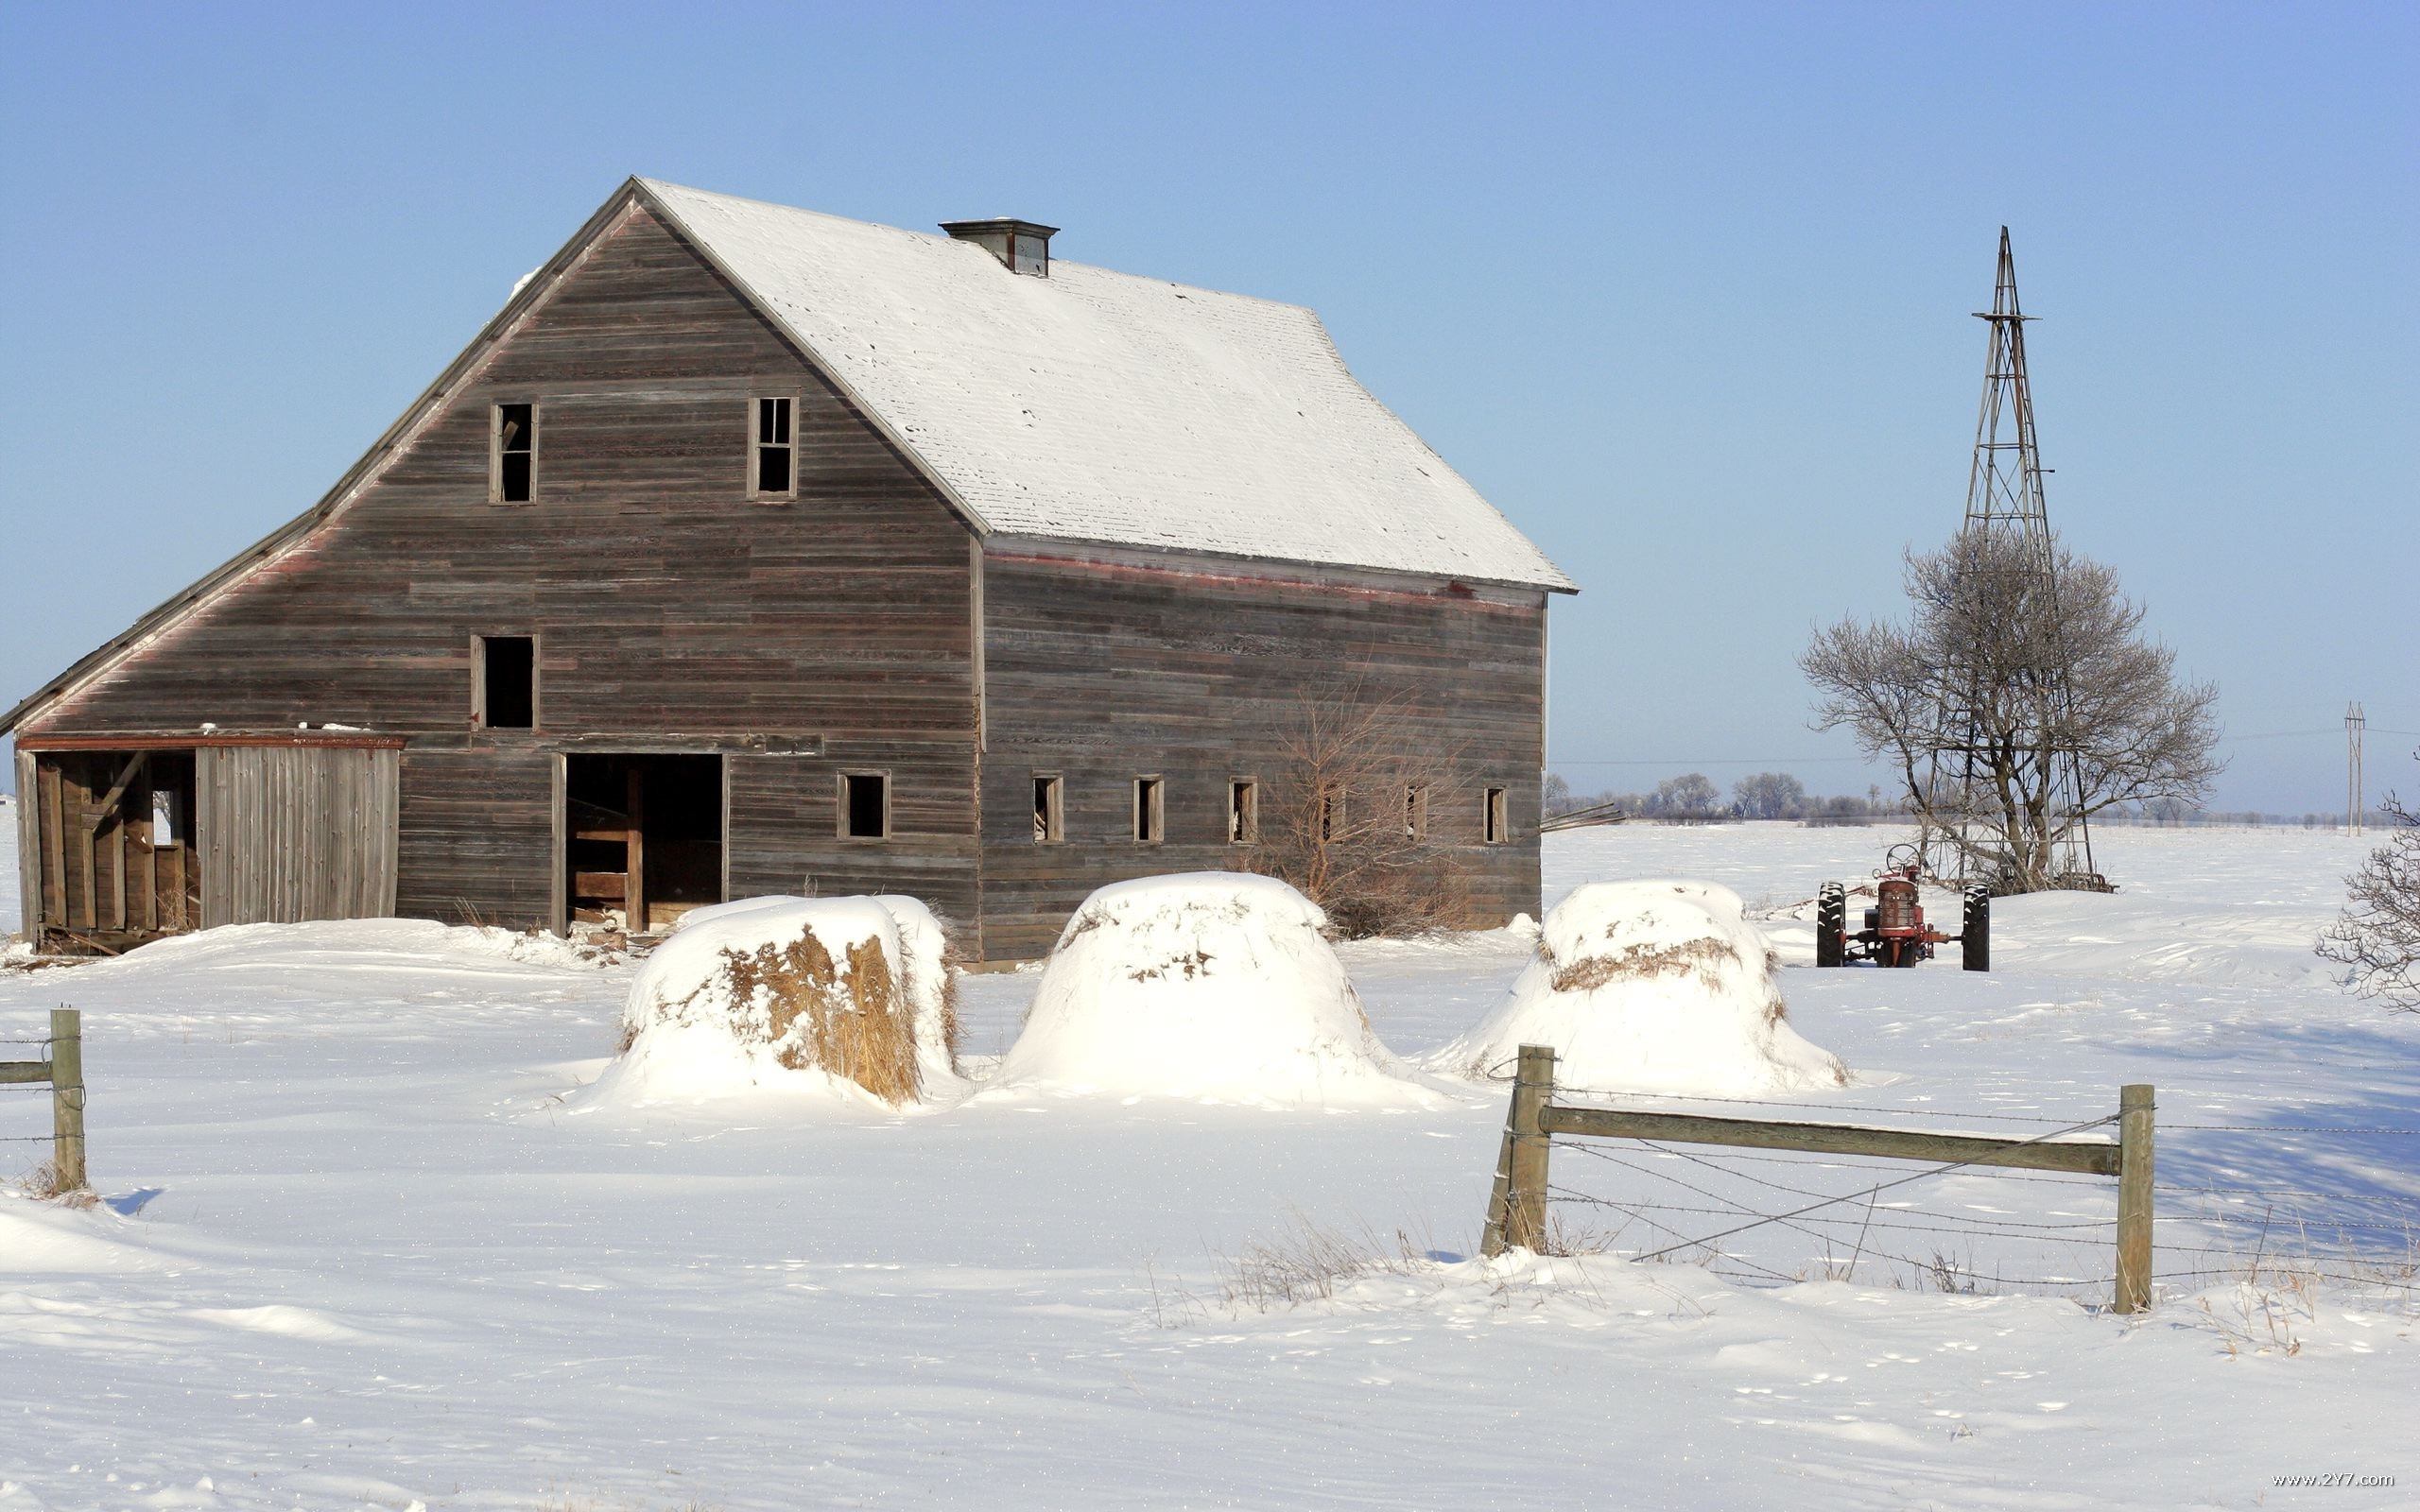  Snow Covered Barn Landscape Wallpaper 2560x1600 Wallpoper 152020